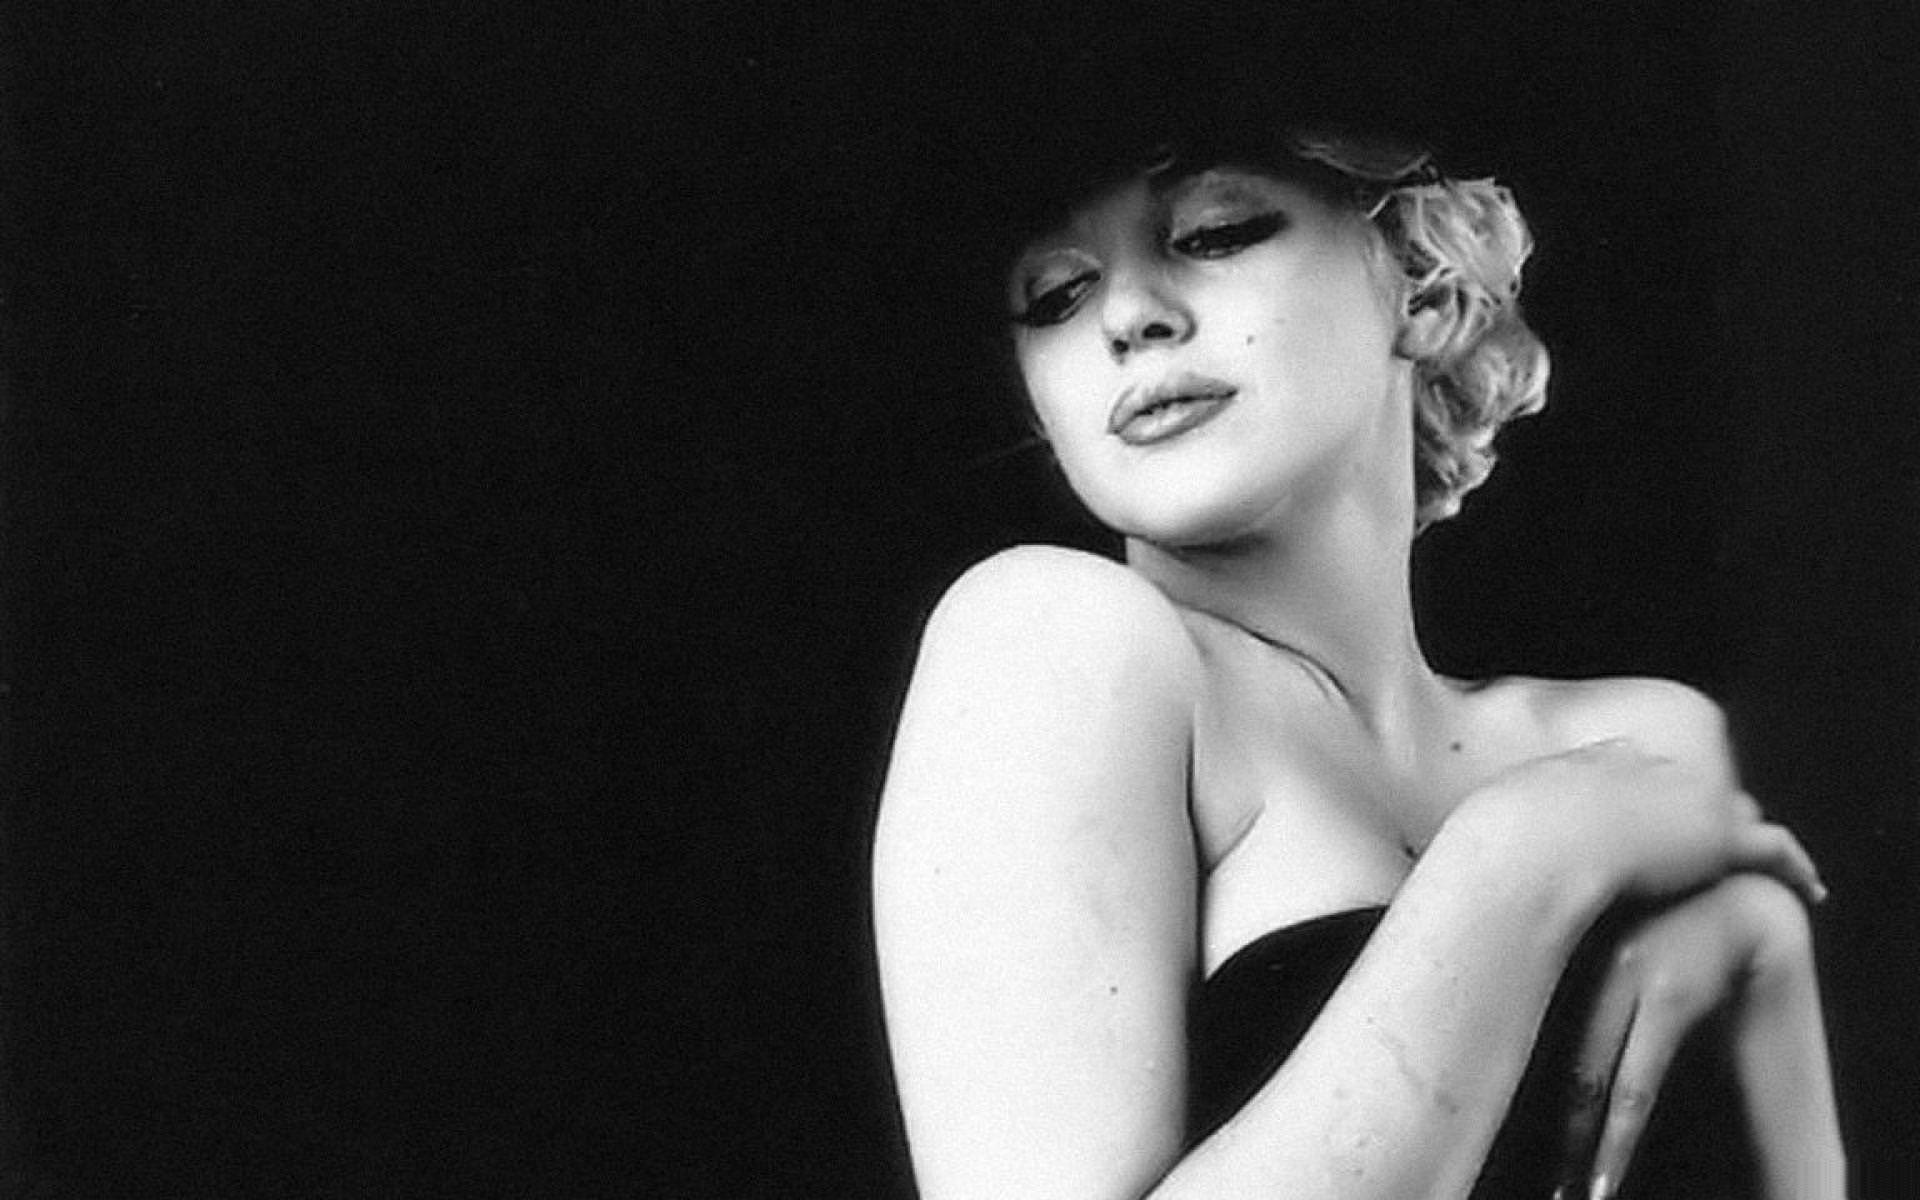 Download Wallpaper 750x1334 Marilyn monroe Singer Actress Bw